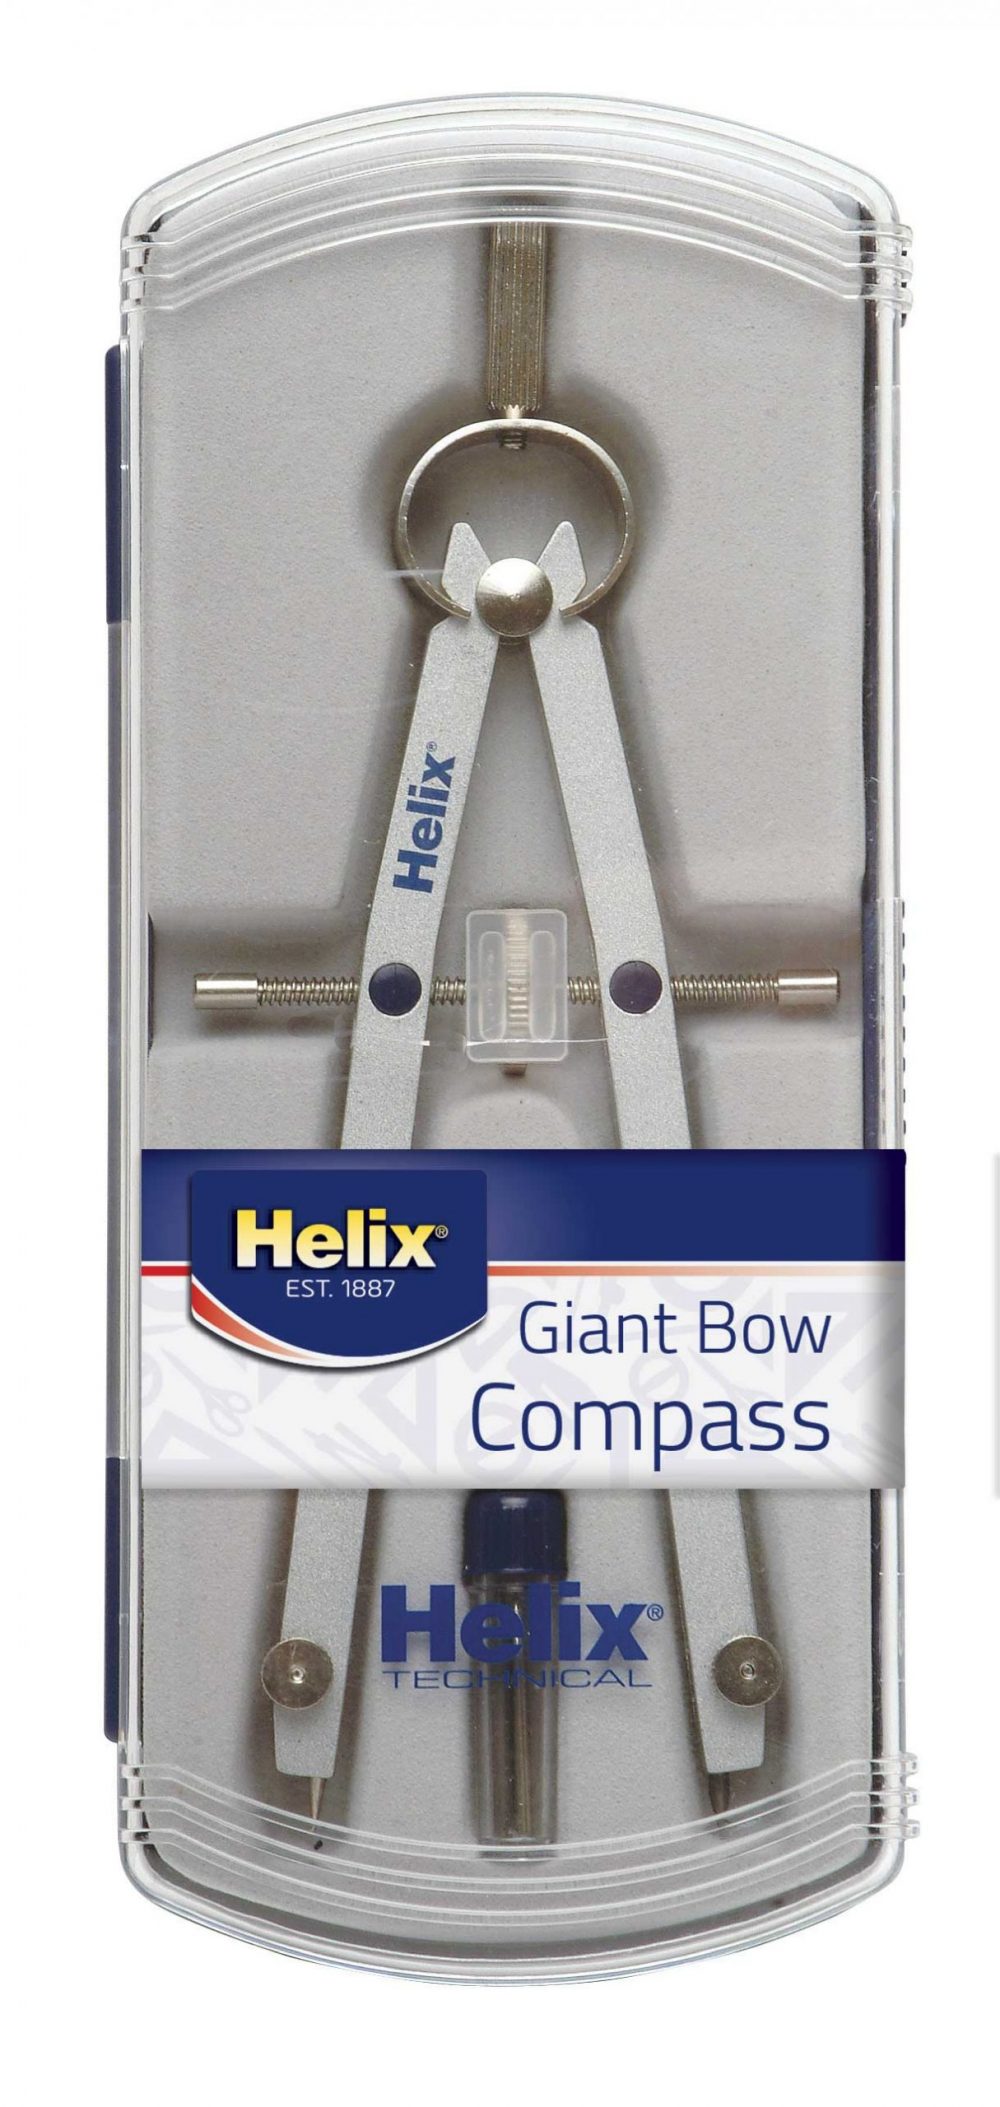 Helix Professional Compass #01320